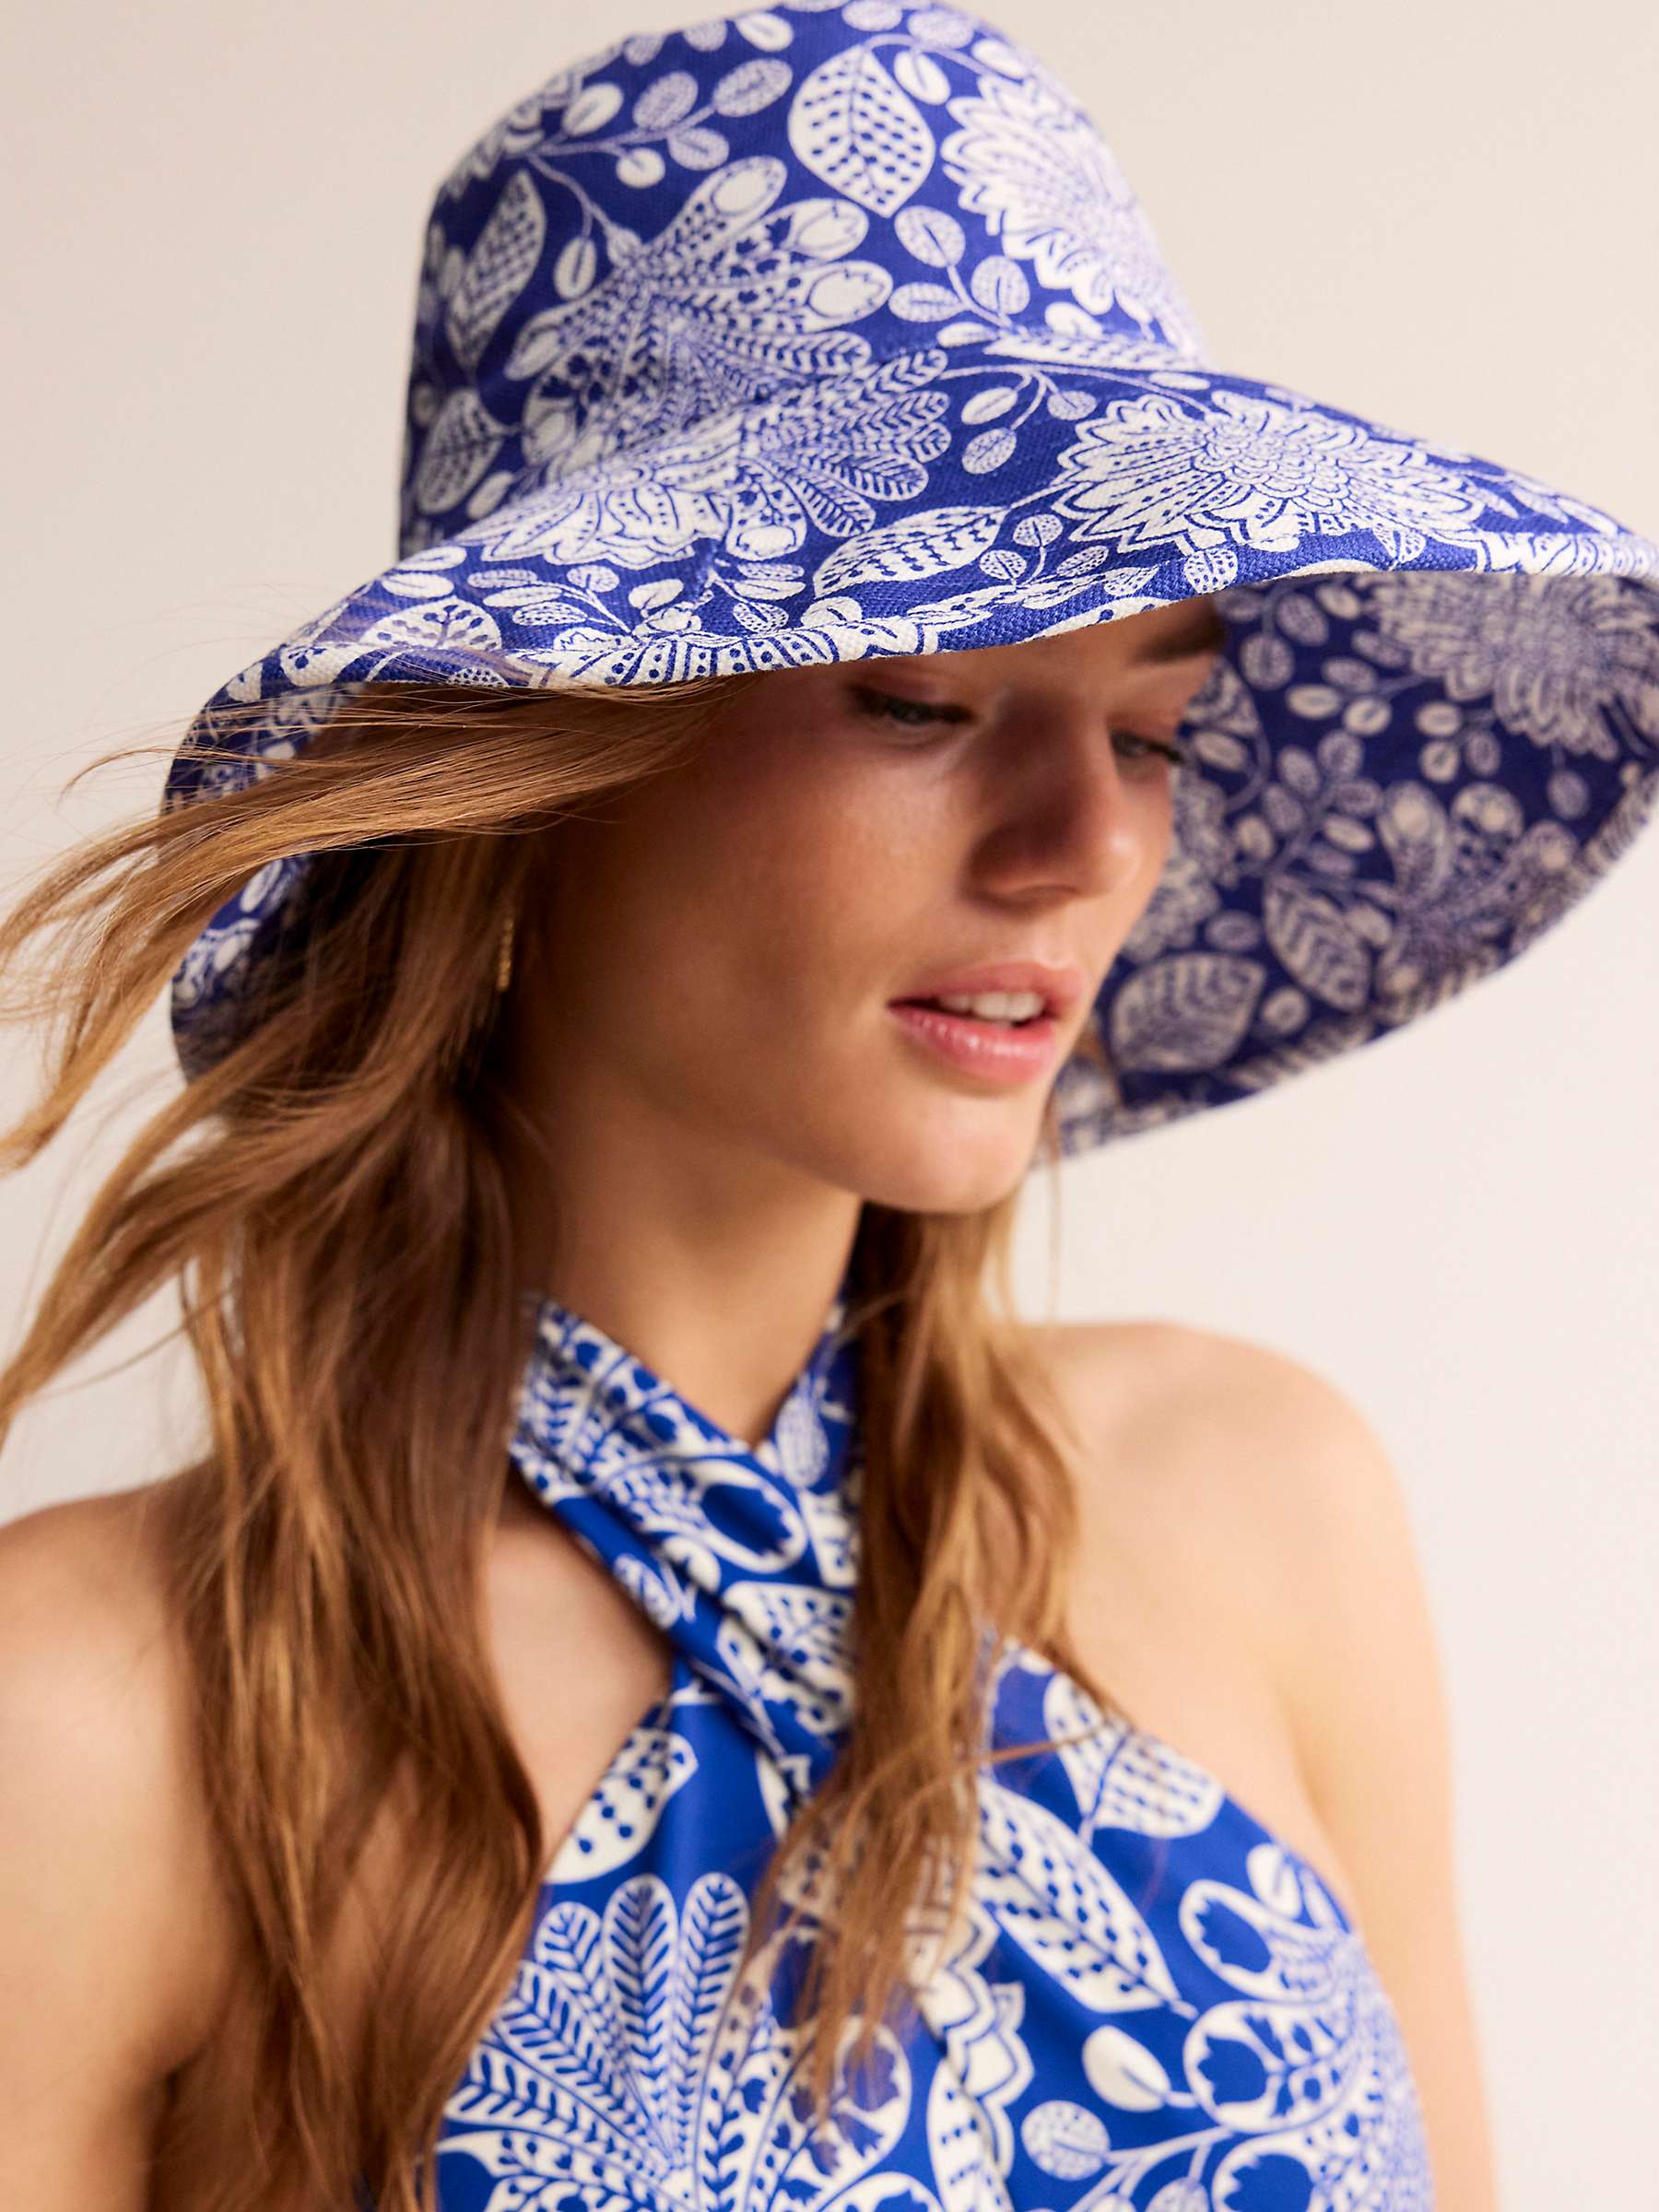 Buy Boden Floral Print Cotton Canvas Bucket Hat, Blue/White Online at johnlewis.com